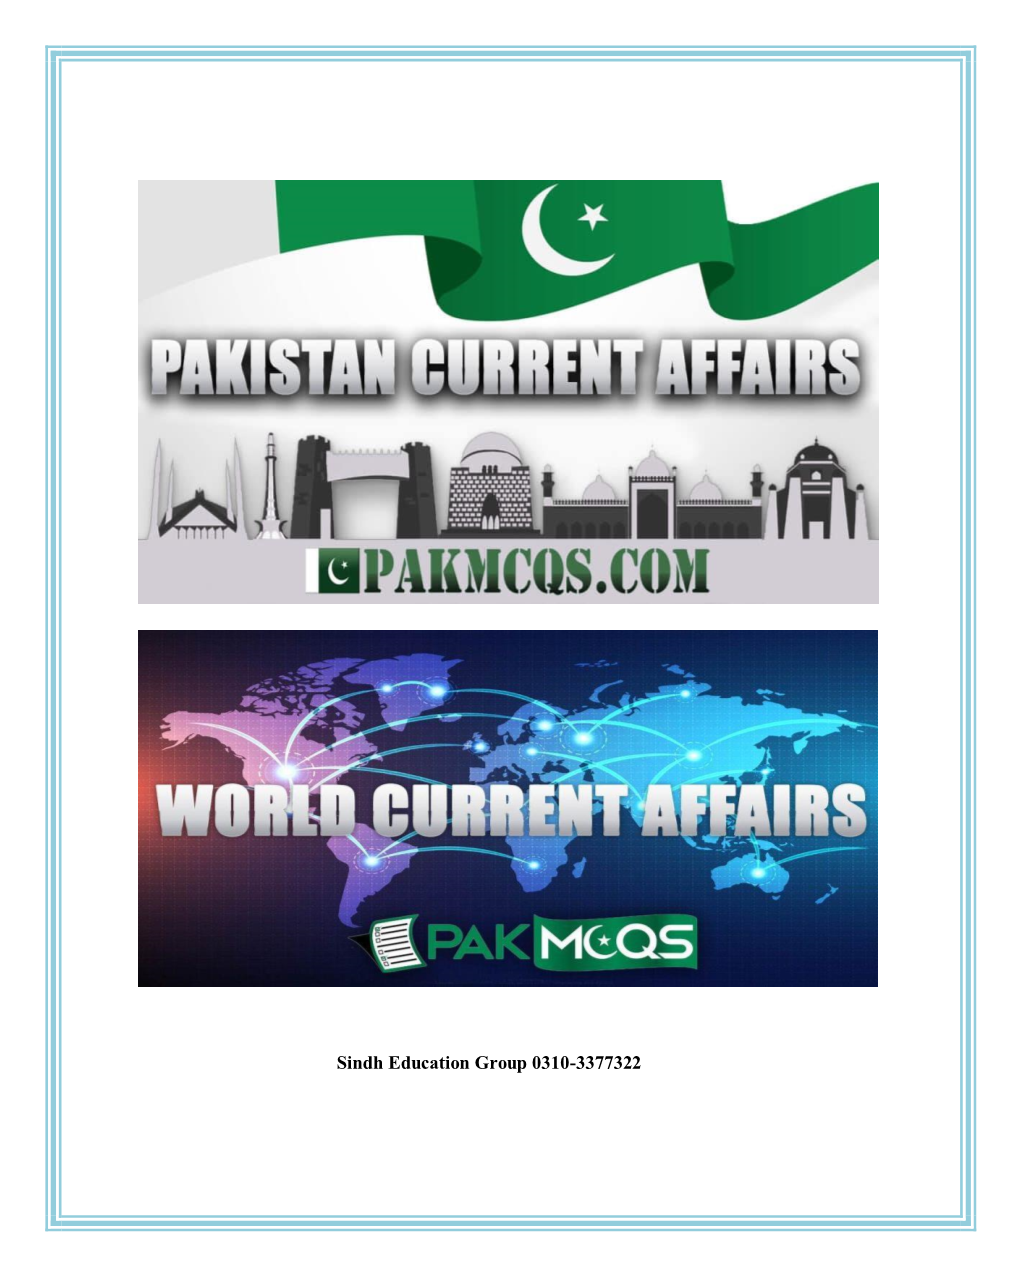 Pakistan Current Affairs Solved Mcqs by Pakmcqs